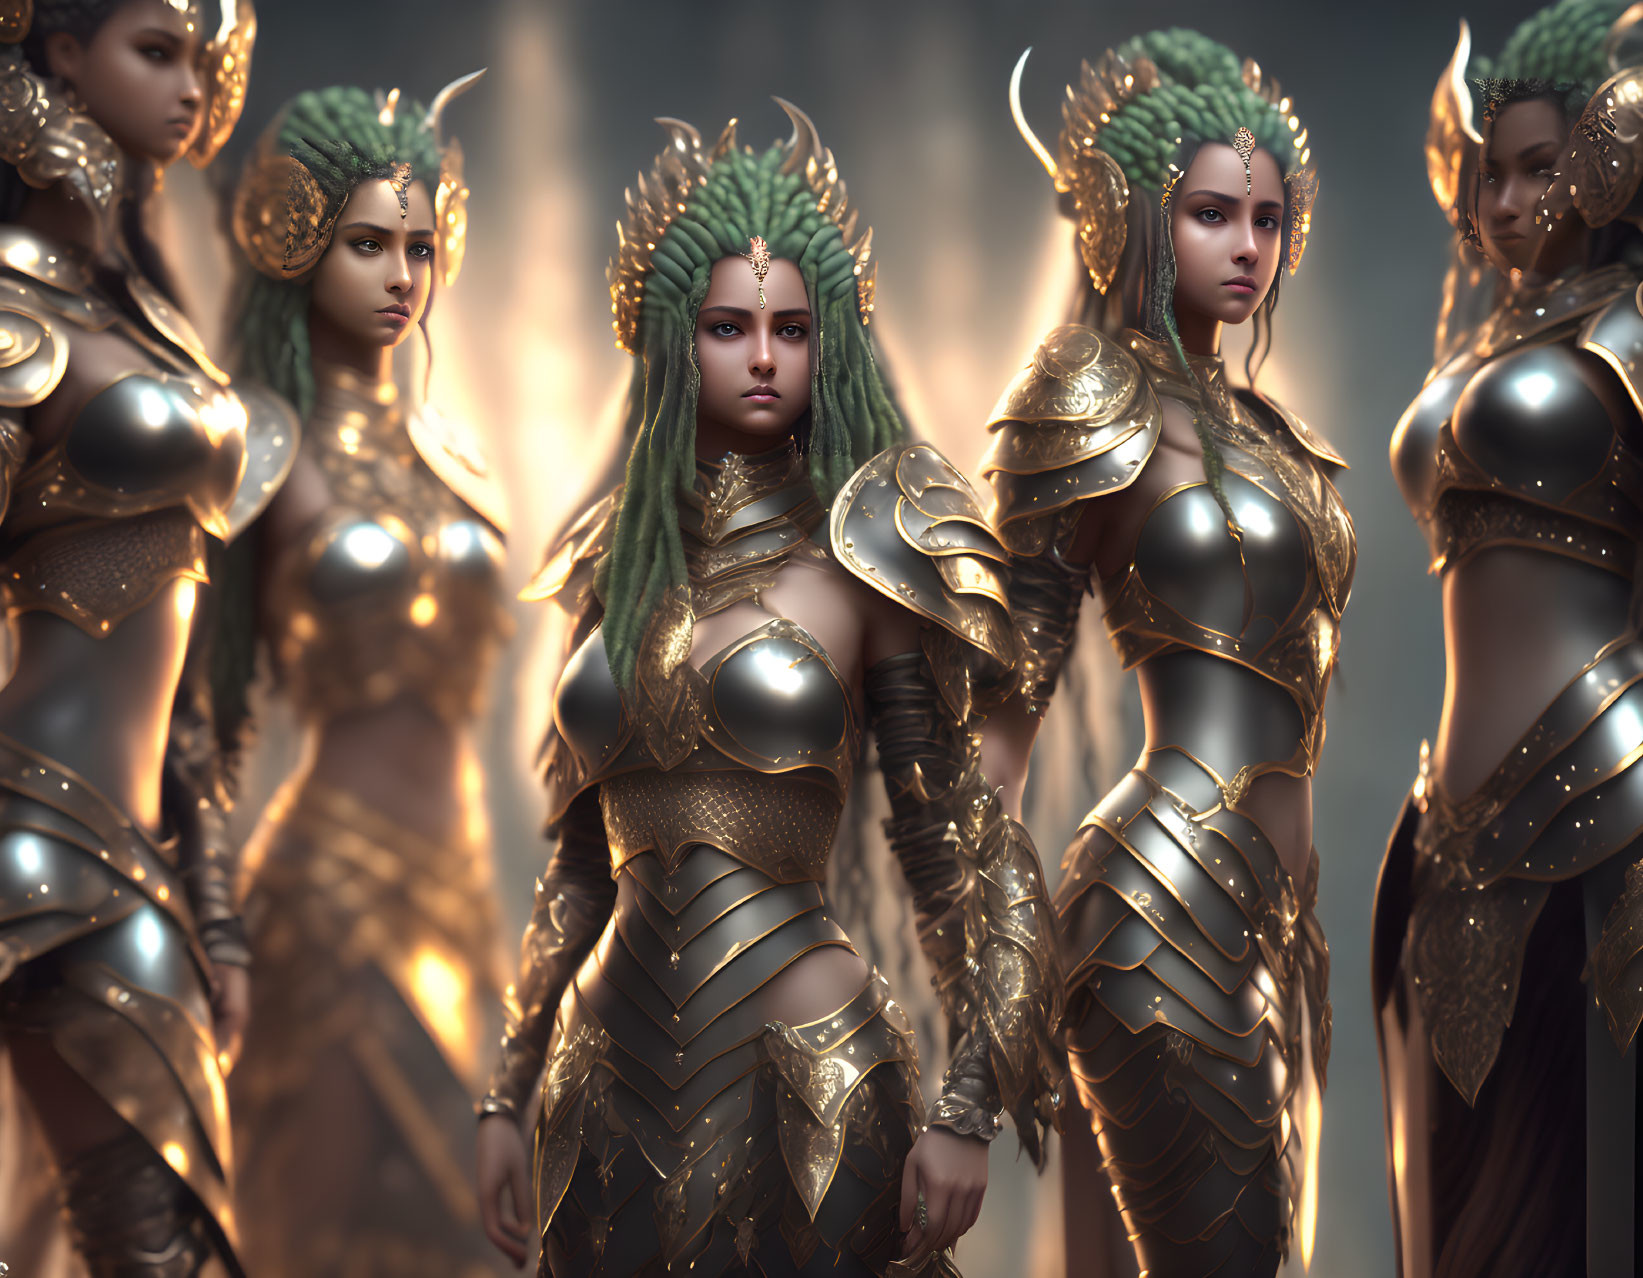 Warrior Women in Elaborate Golden Armor with Dragon-like Helmets